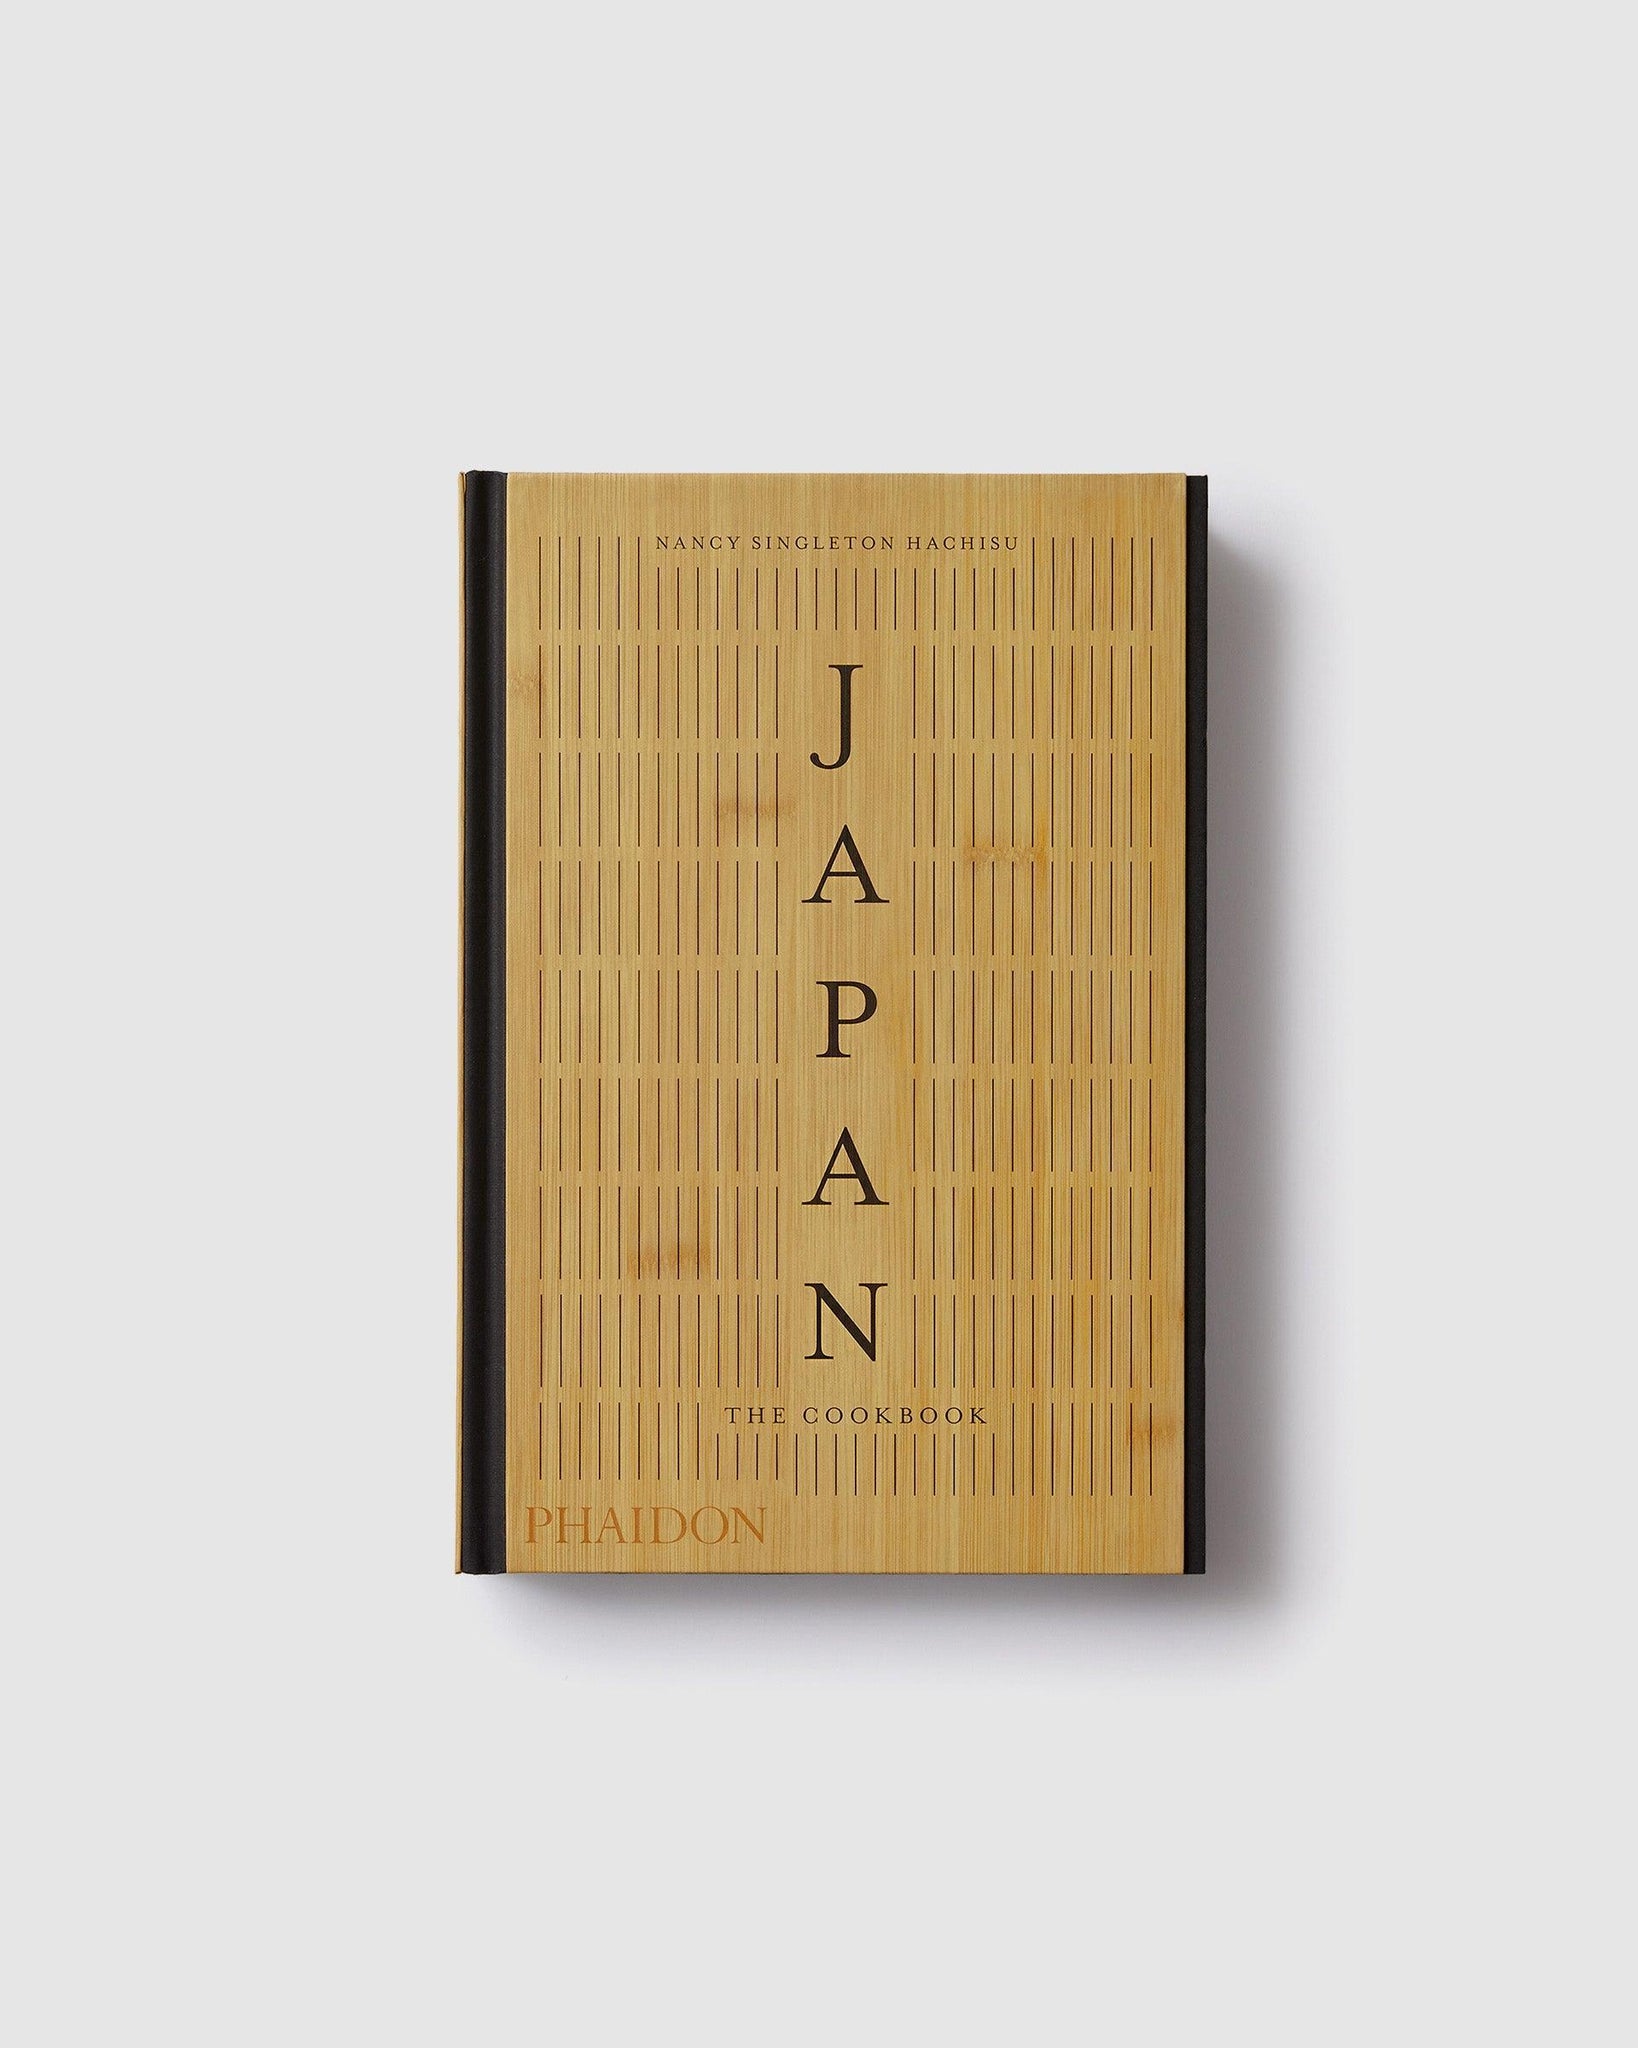 Japan, The Cookbook: Nancy Singleton Hachisu - {{ collection.title }} - Chinatown Country Club 